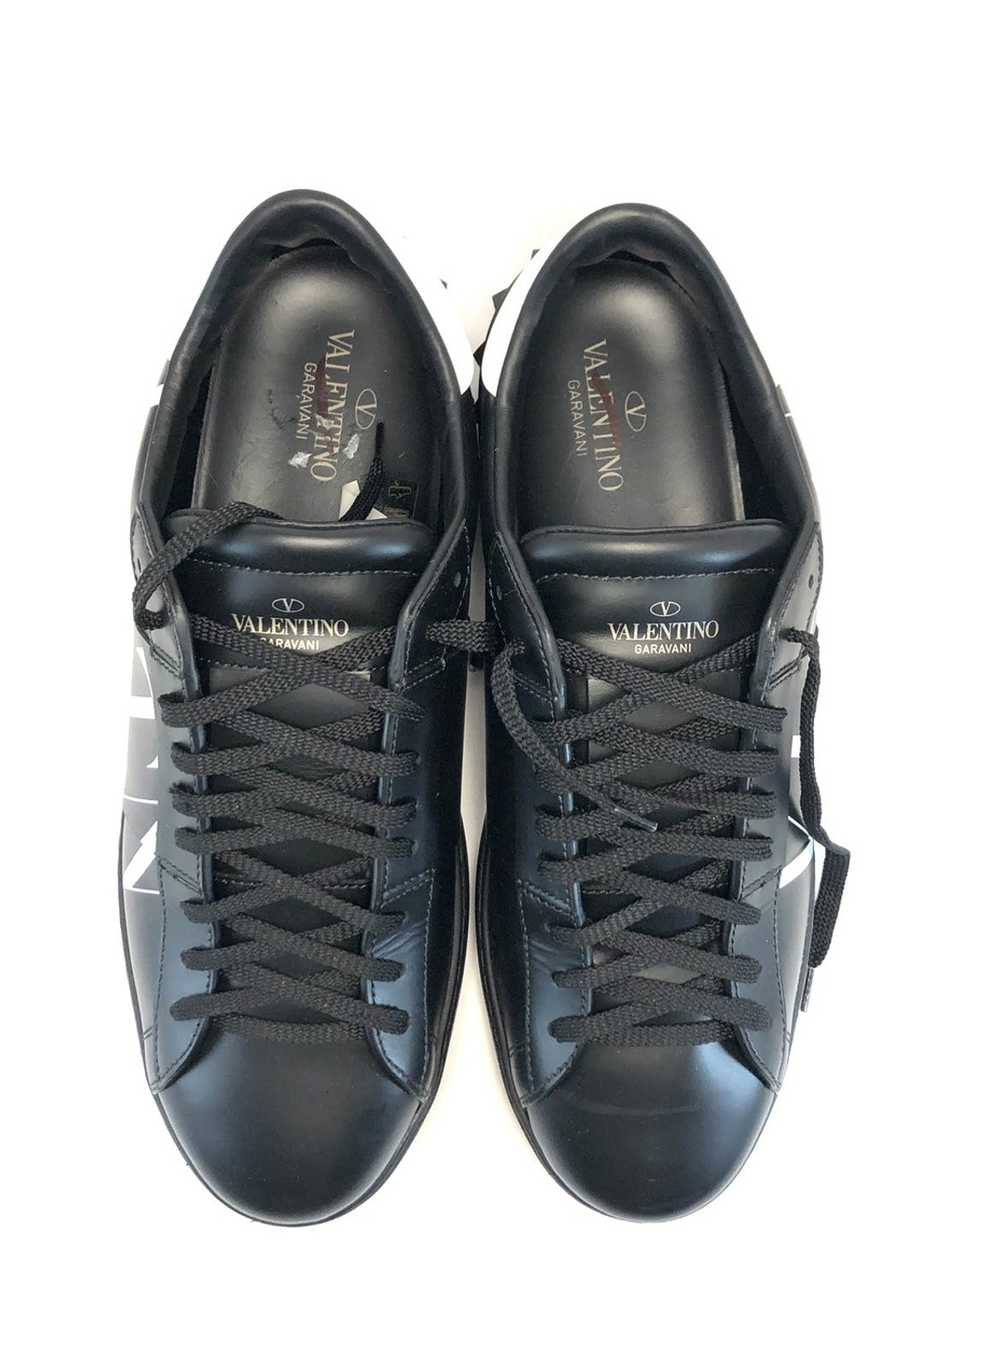 Valentino Valentino garavani sneakers - image 7